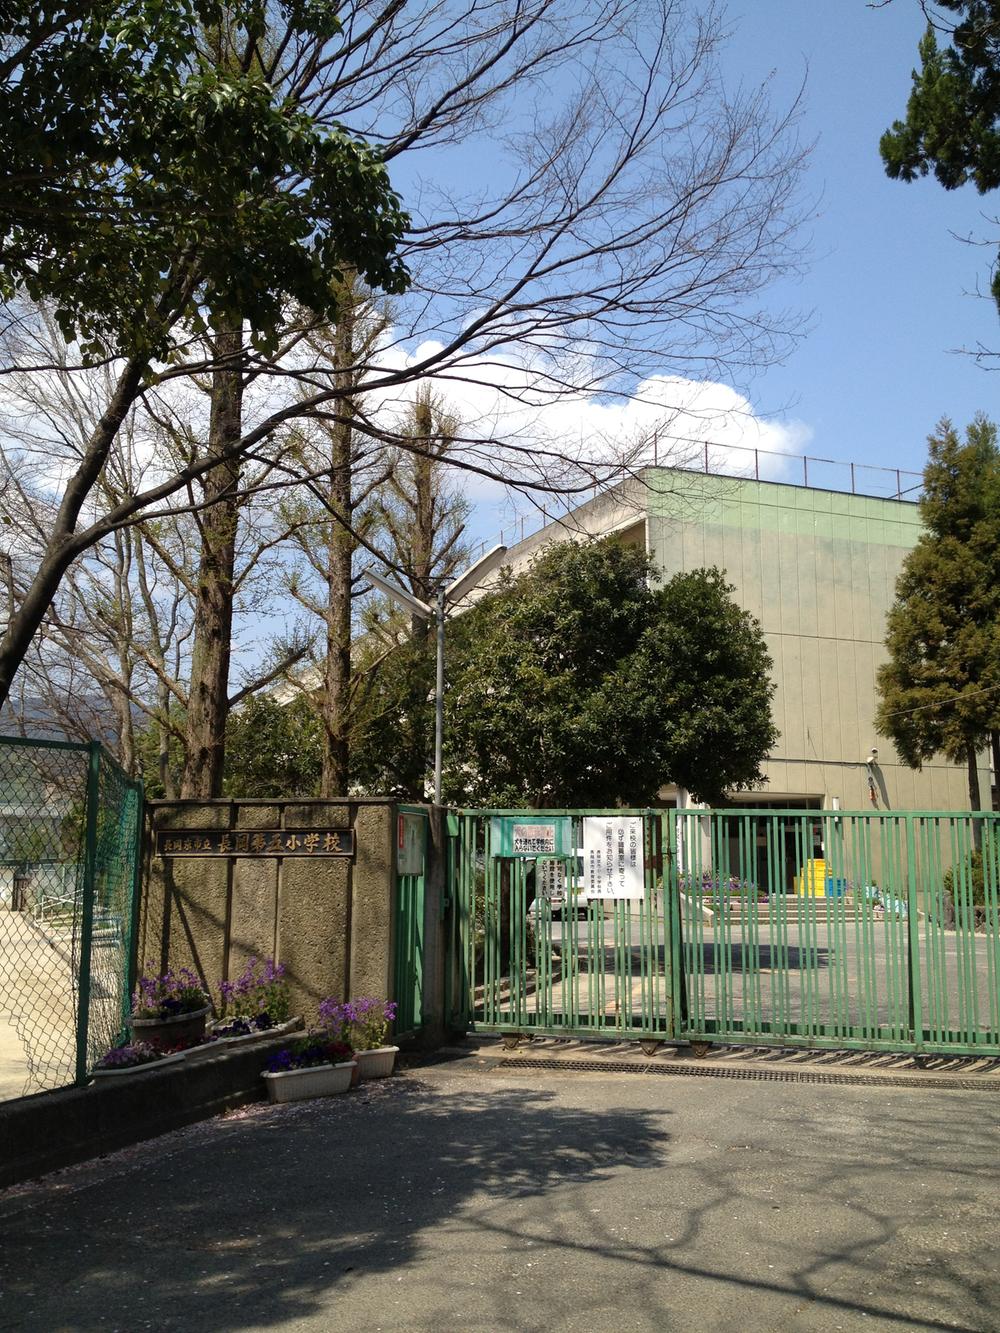 Primary school. Nagaokakyo 746m to stand Nagaoka fifth elementary school